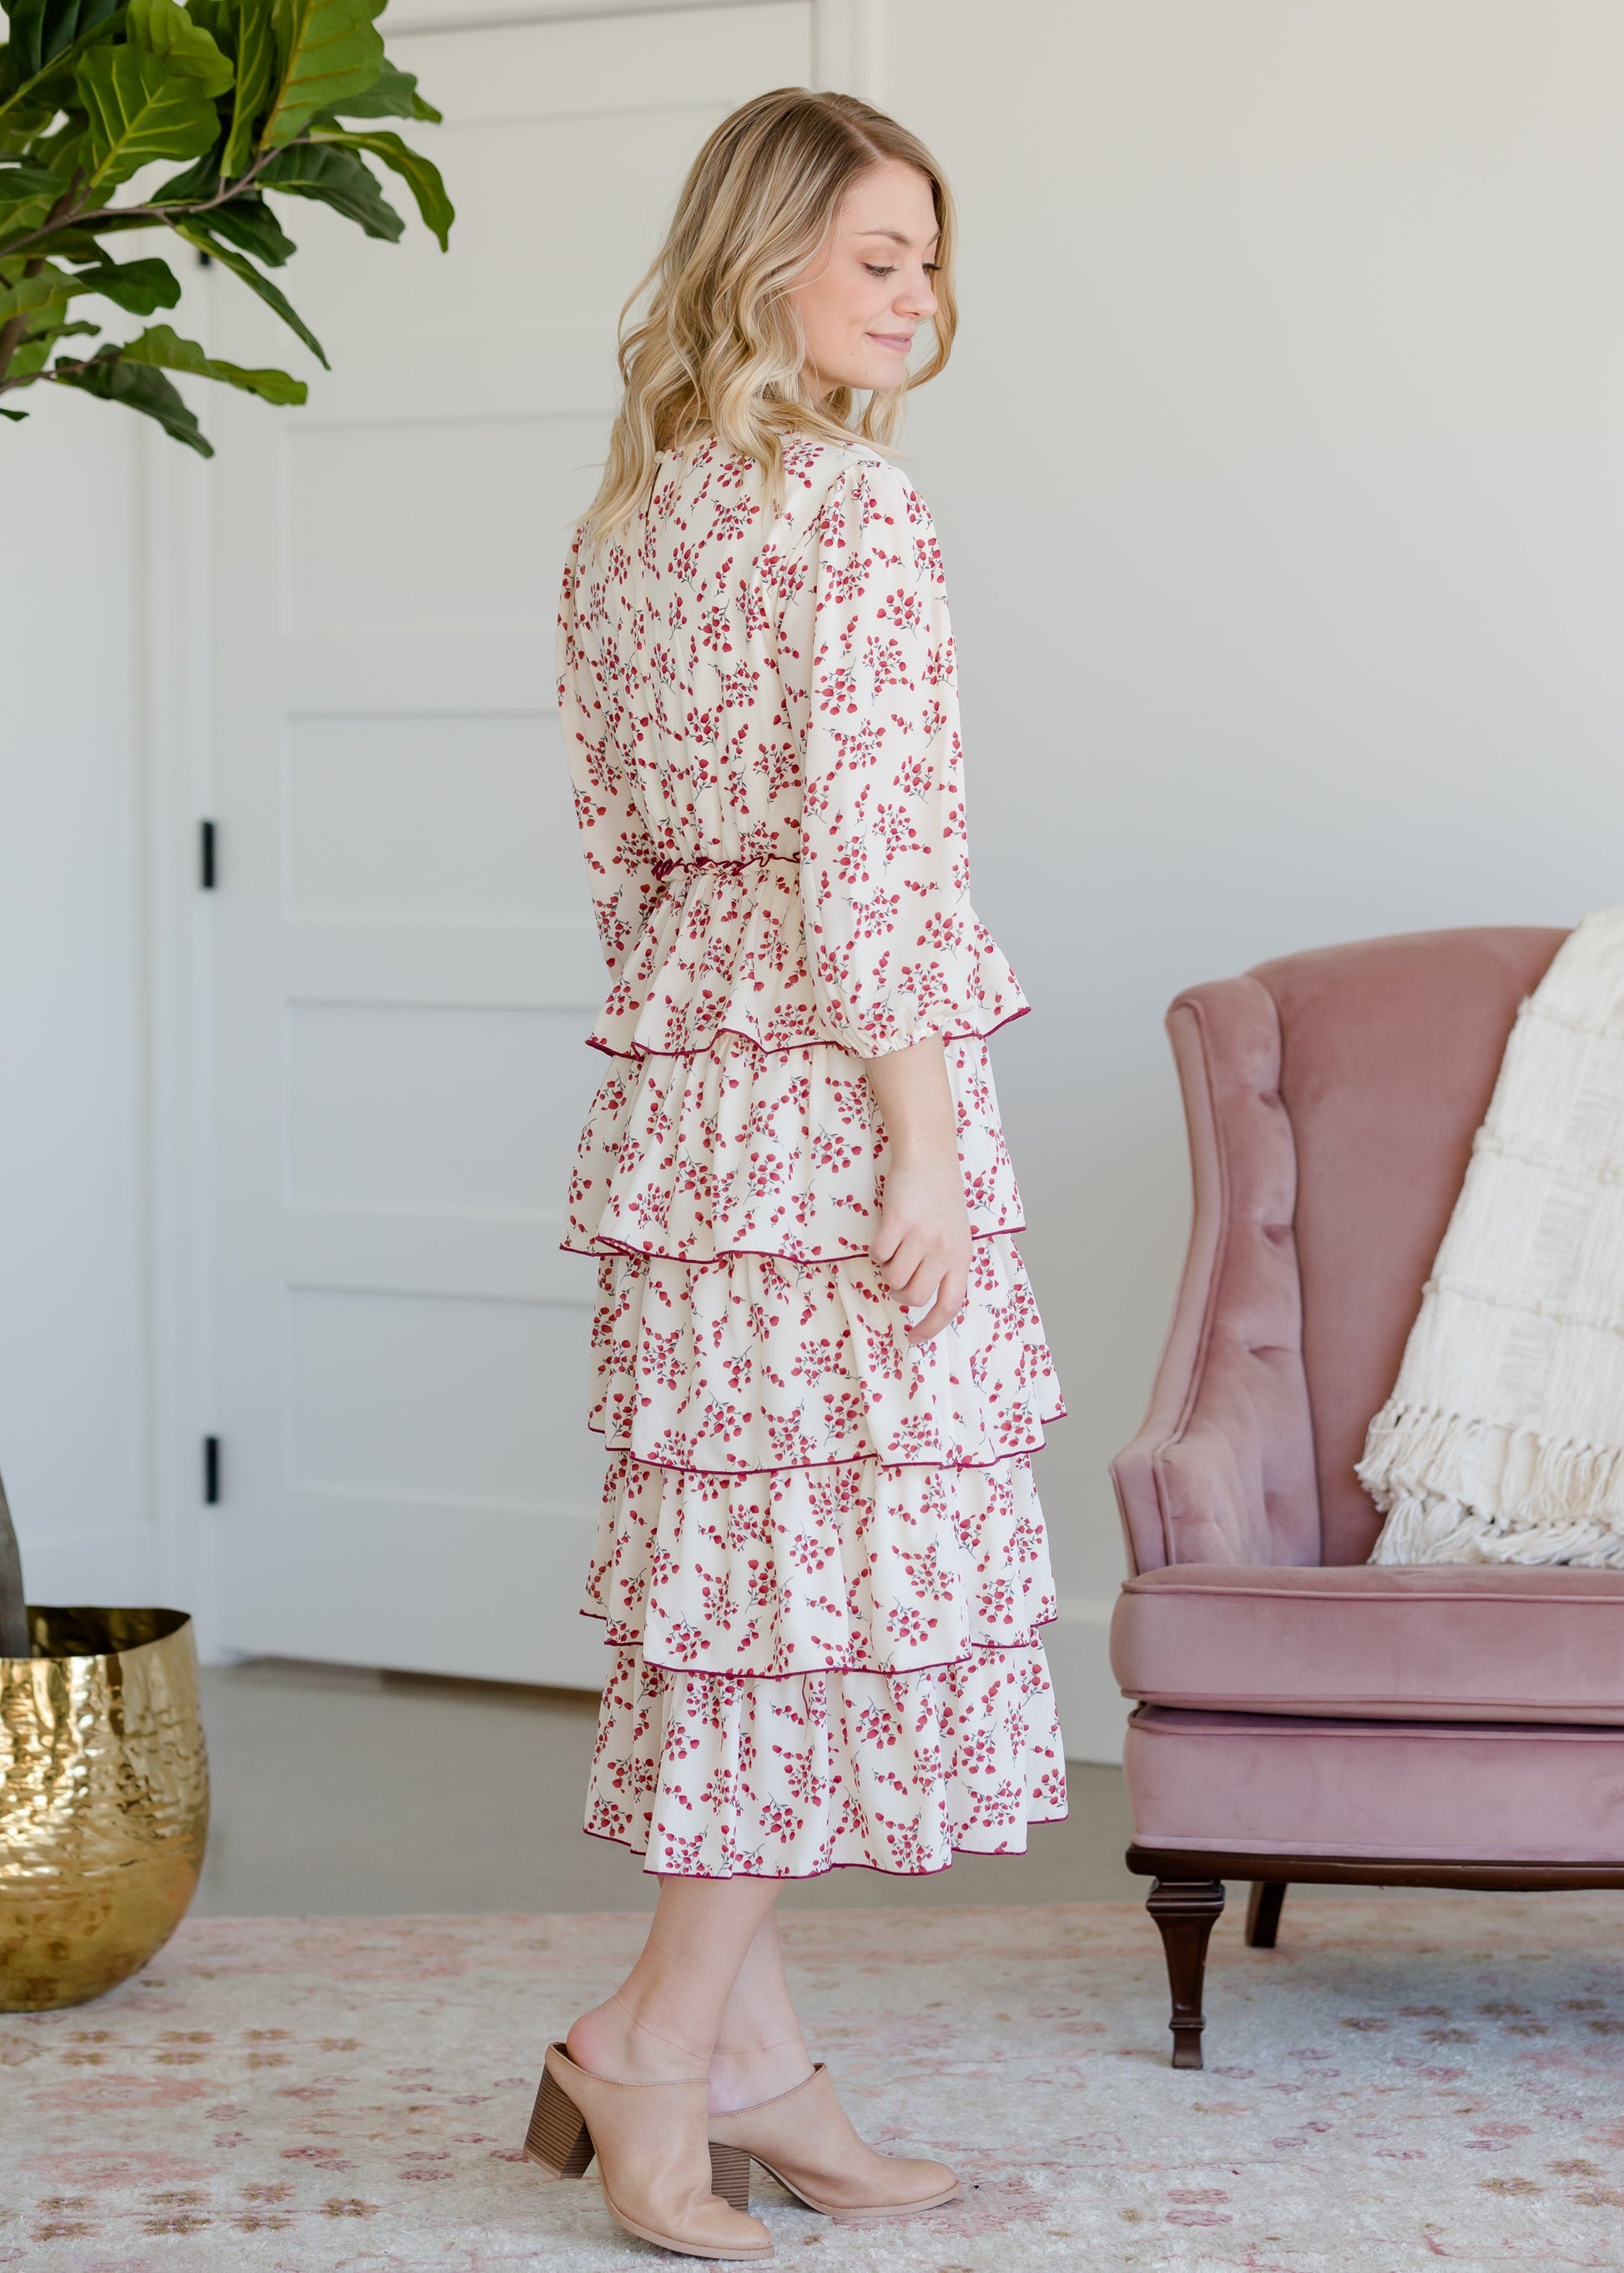 Floral and Cream Ruffled Midi Dress - FINAL SALE Dresses